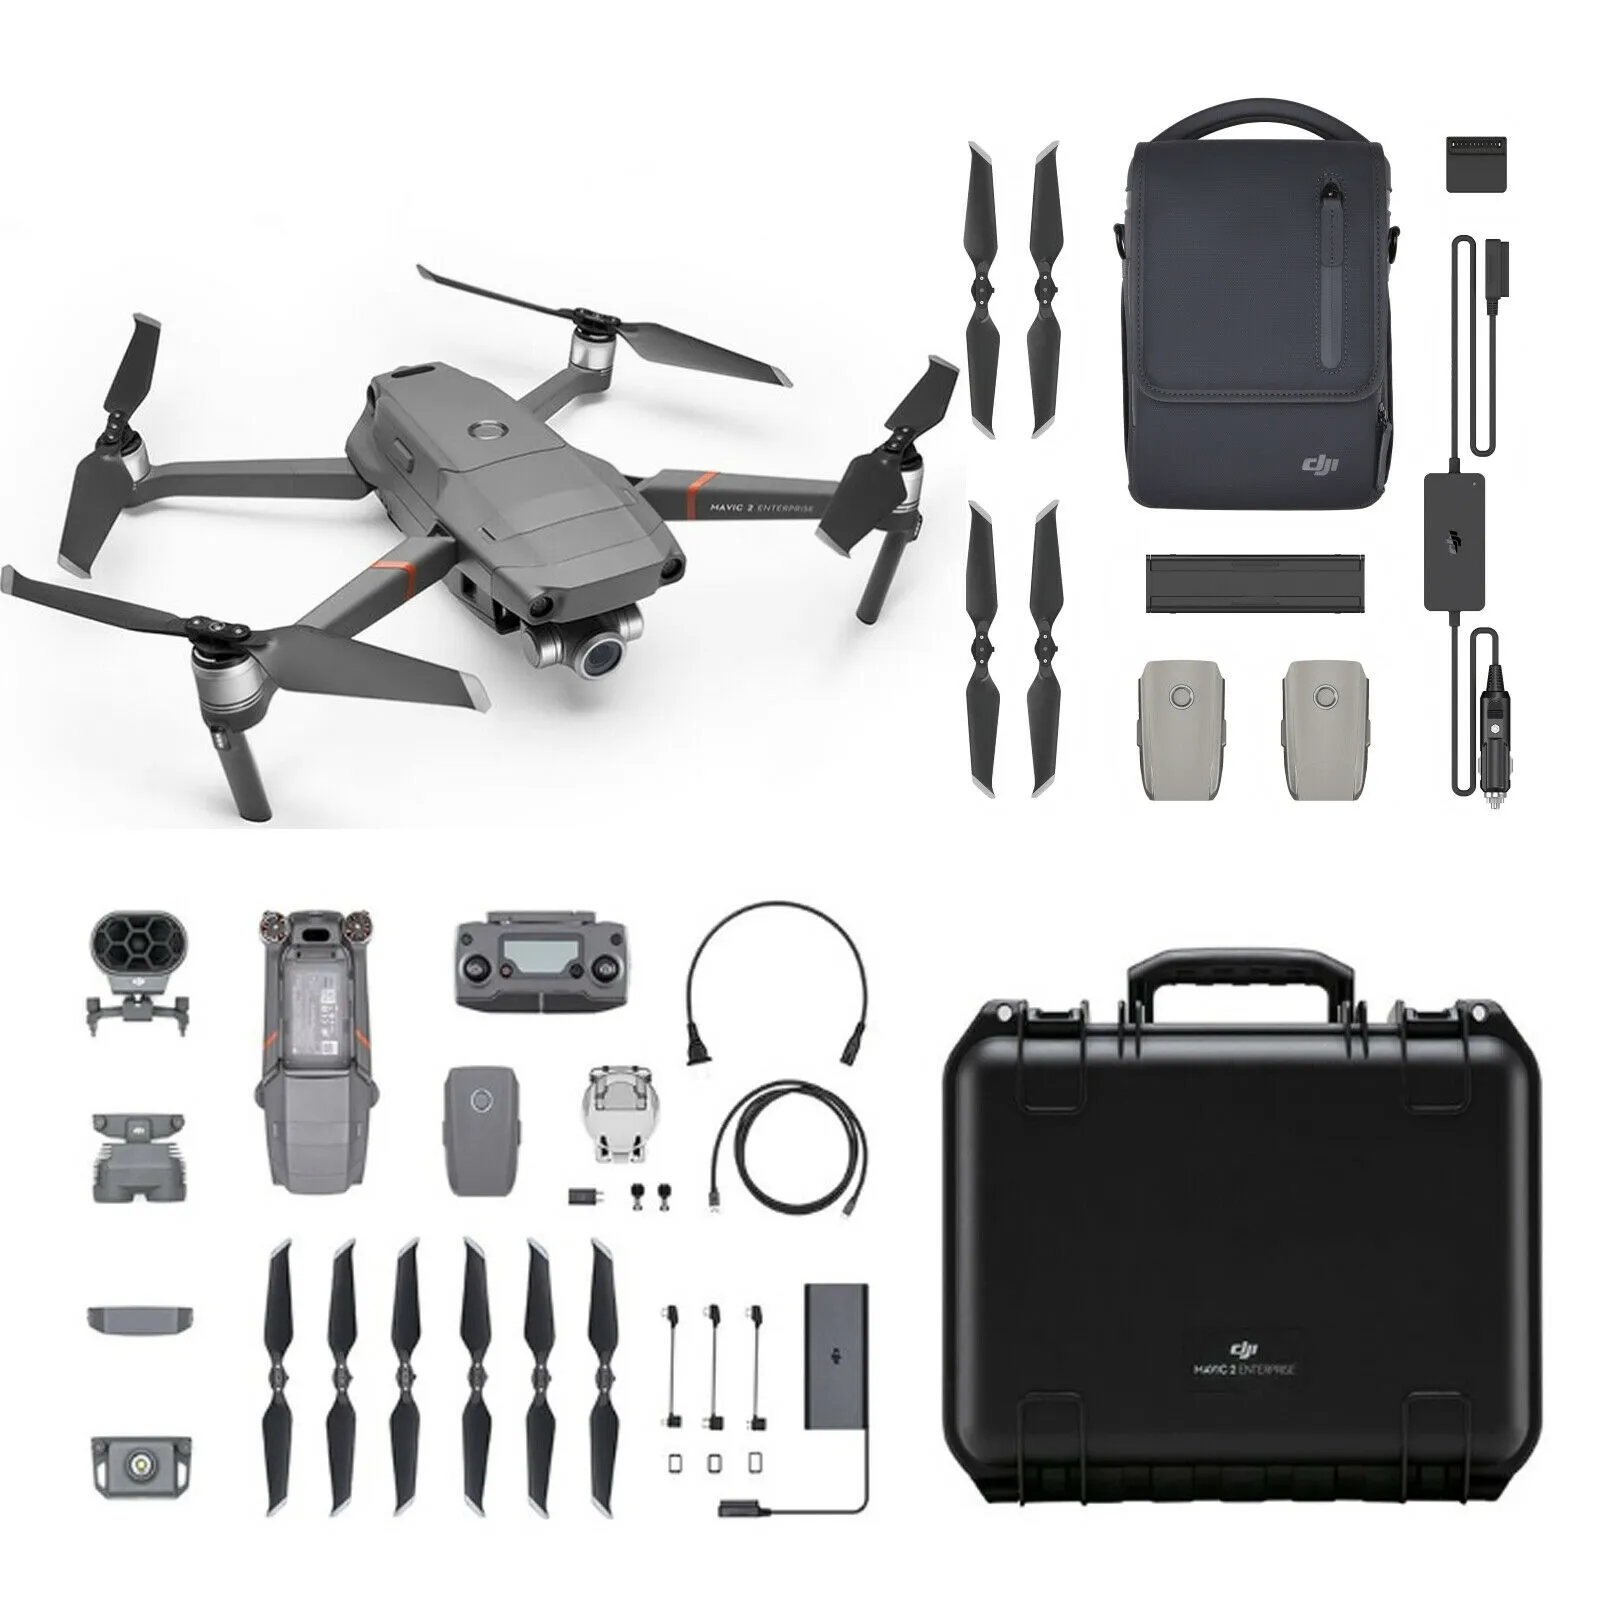 Wholesale 100% Original and Brand New for DJI Mavic 2 Enterprise Zoom 4K Drone & Fly More Combo Kit